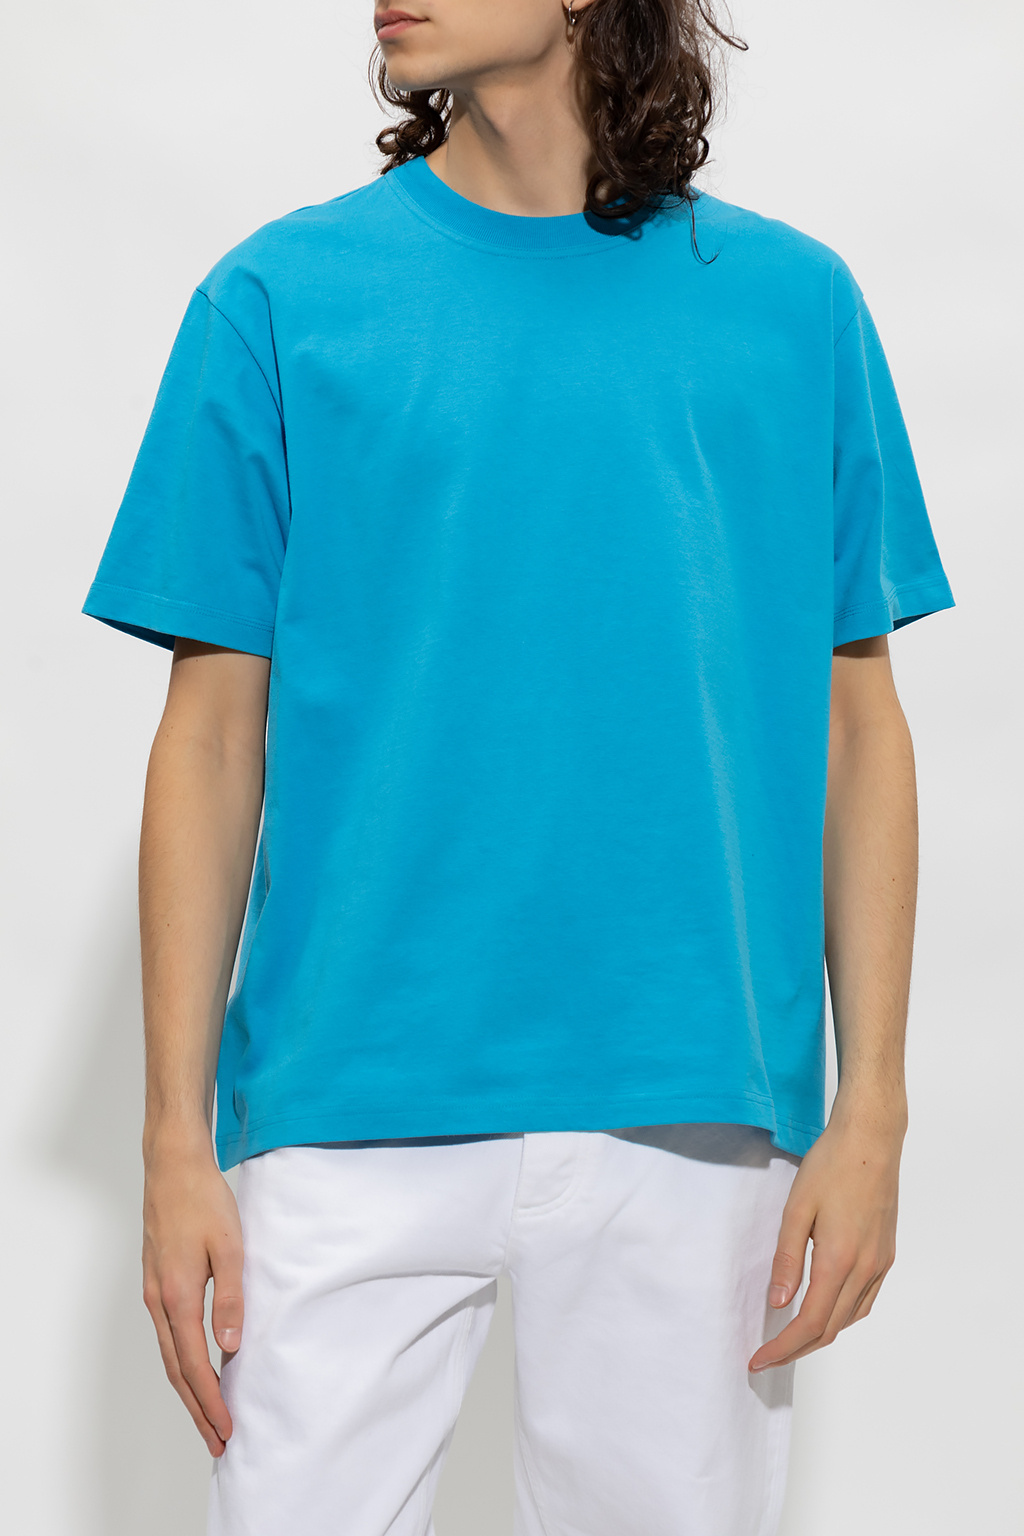 Bottega Veneta Cotton T-shirt